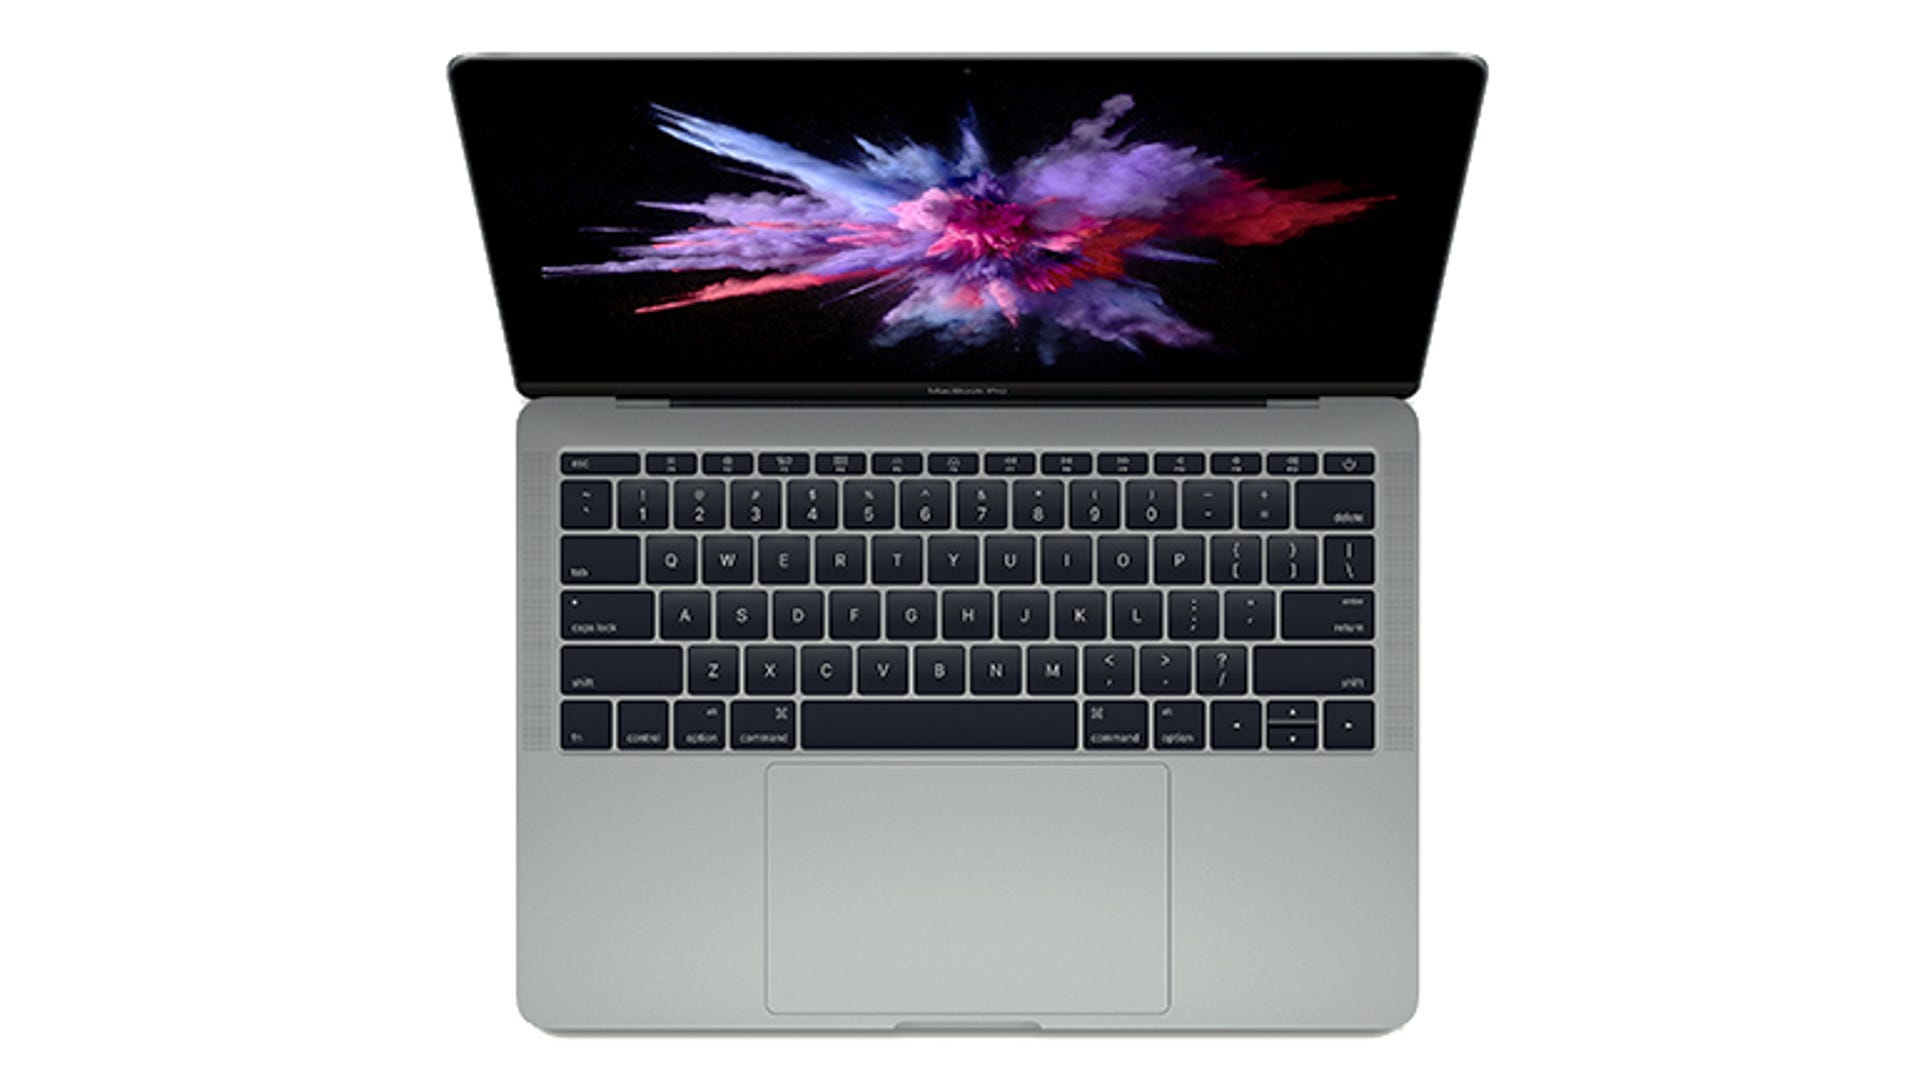 Çözülme, çözülme, donma çözülme Şık orman  Apple 13-inch MacBook Pro (2016) review: Touch Bar-free model offers  impressive battery life and portability | ZDNet